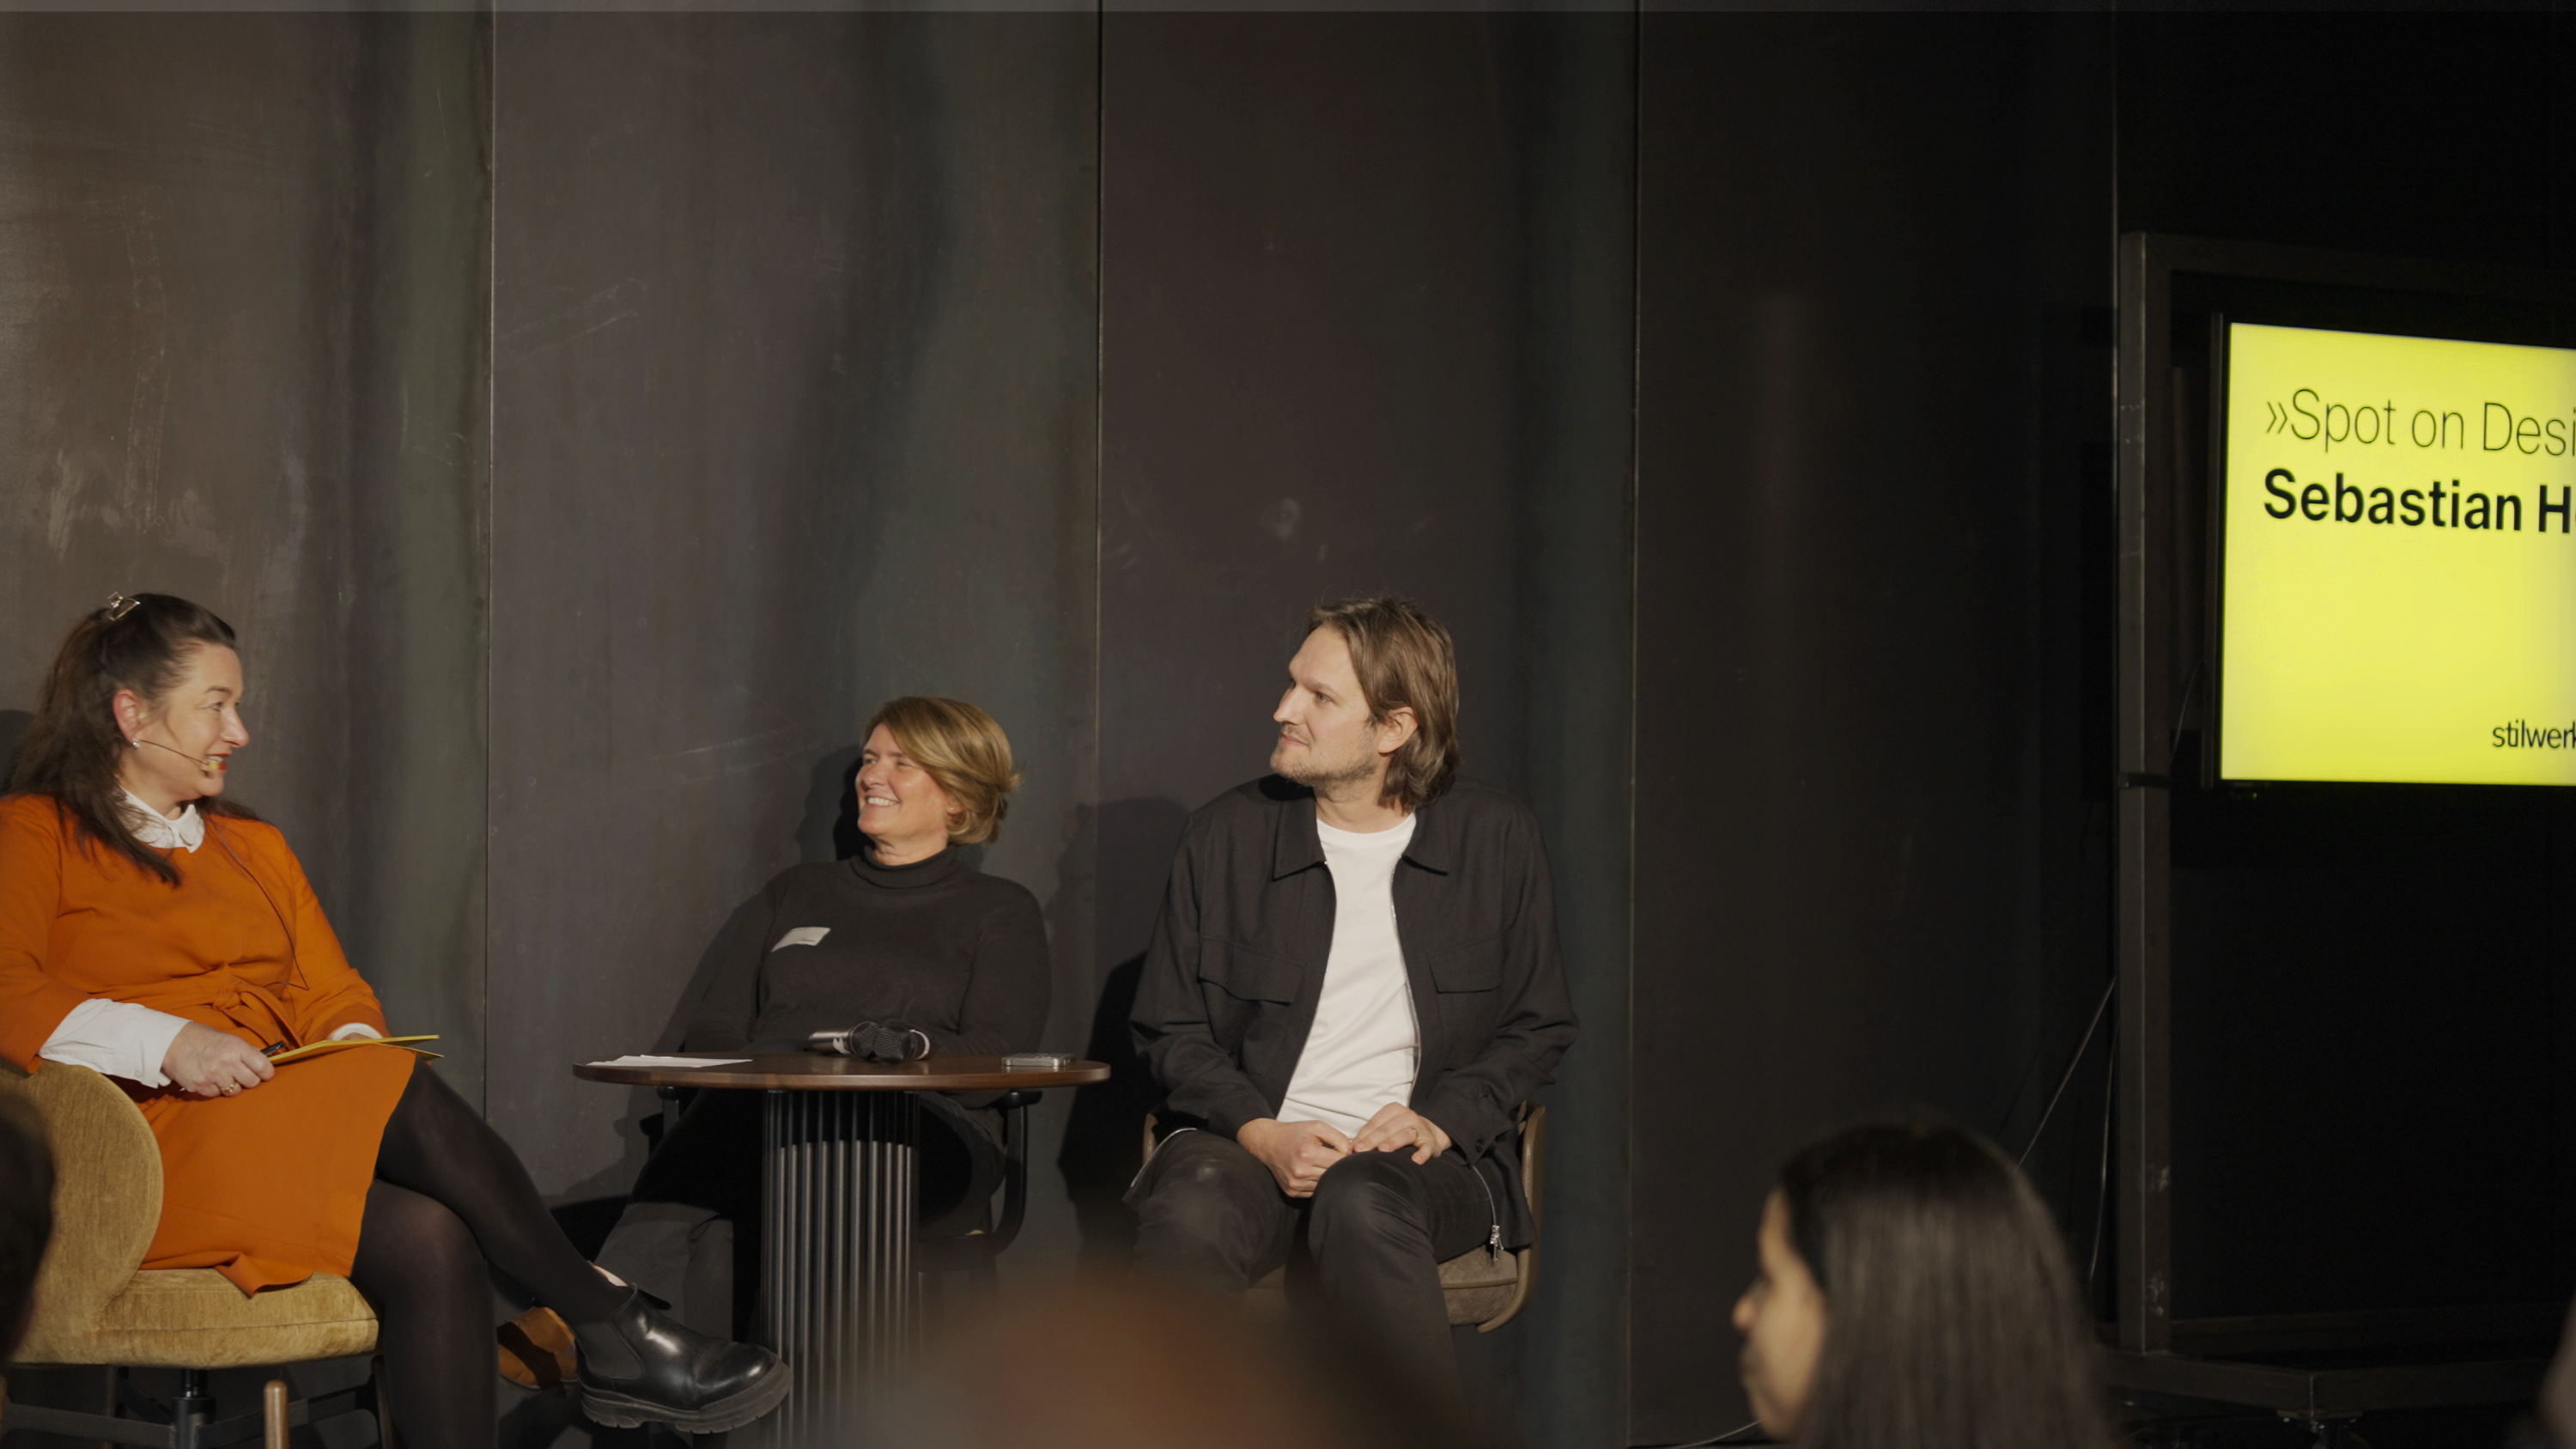 From left to right: Frances Uckermann in conversation with Tatjana Groß and Sebastian Herkner.